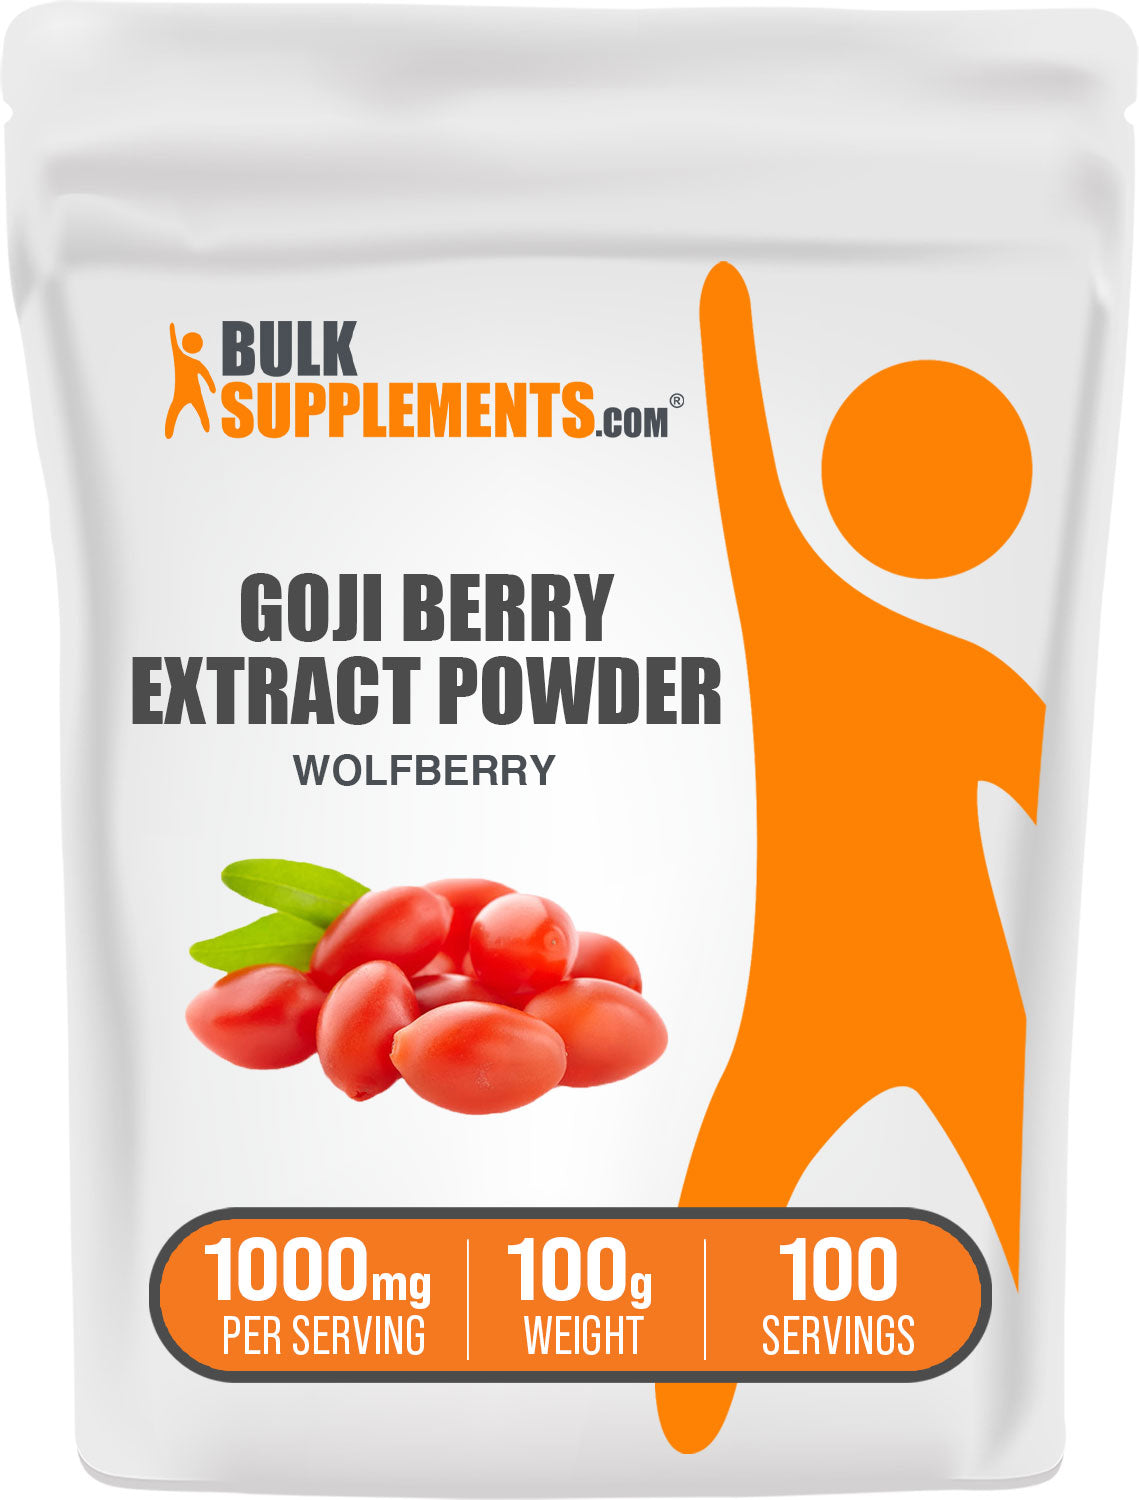 BulkSupplements Goji Berry Extract Powder Wolfberry 100g bag